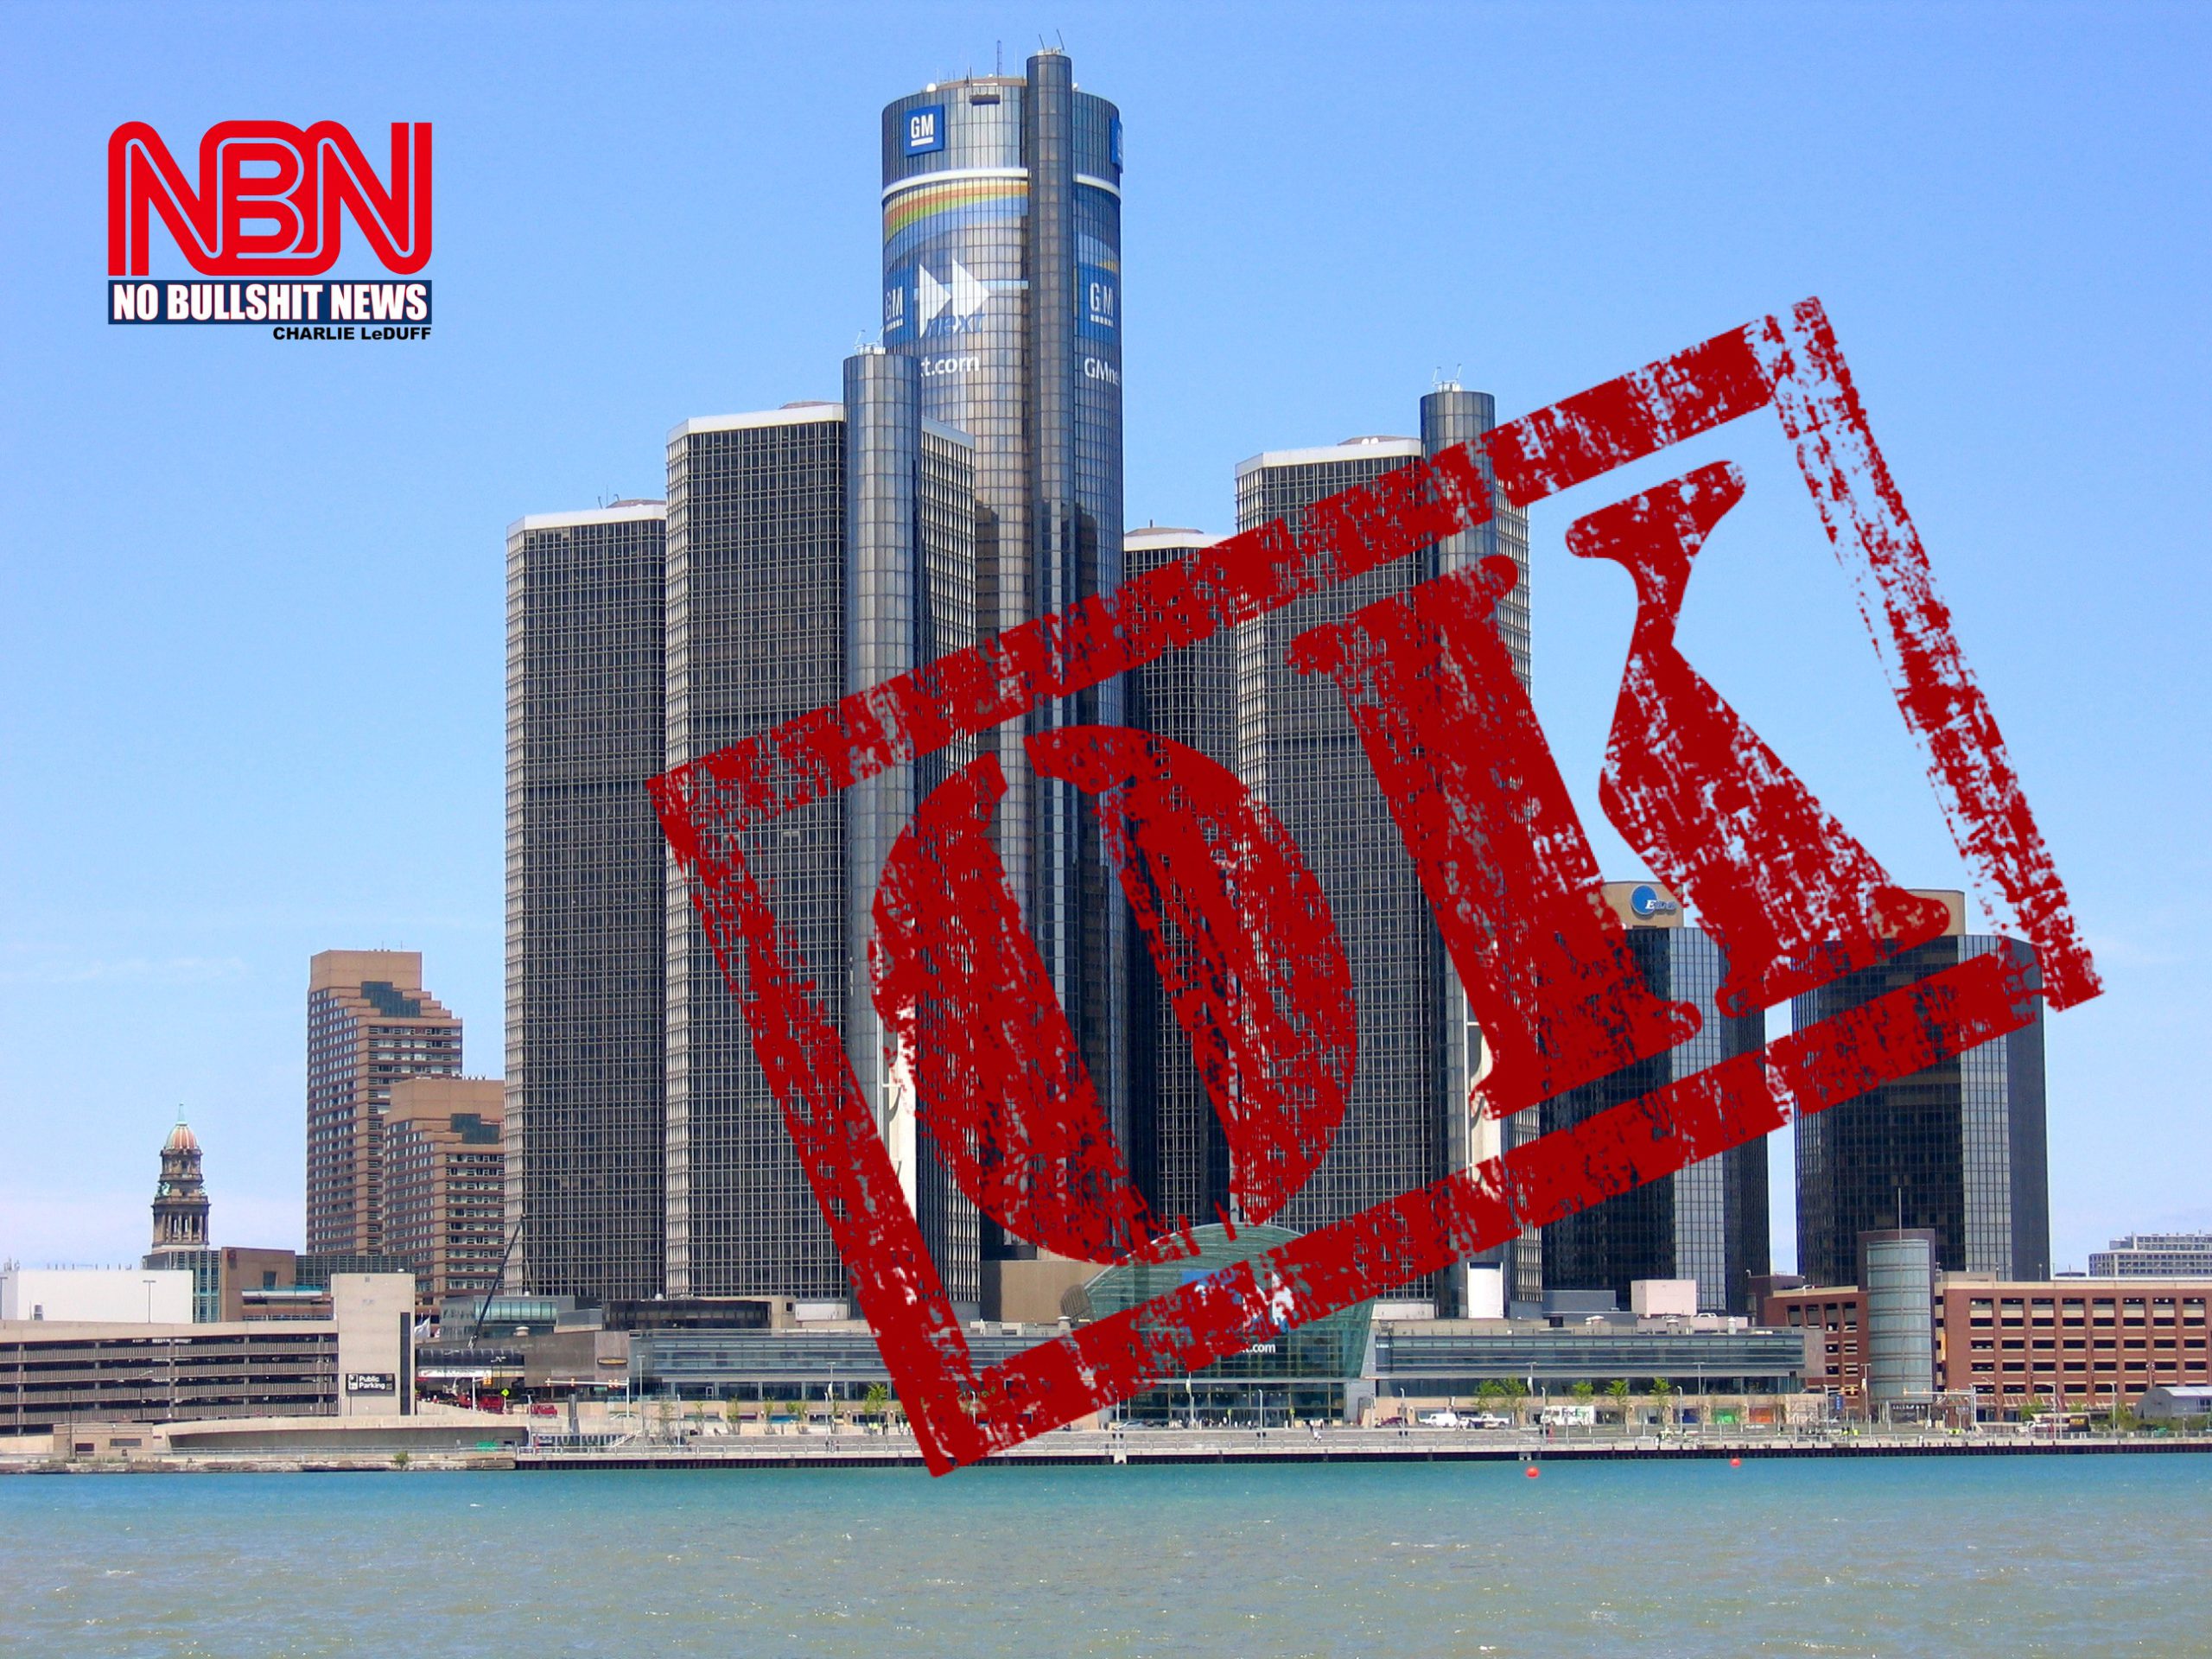 Detroit. We’re OK!